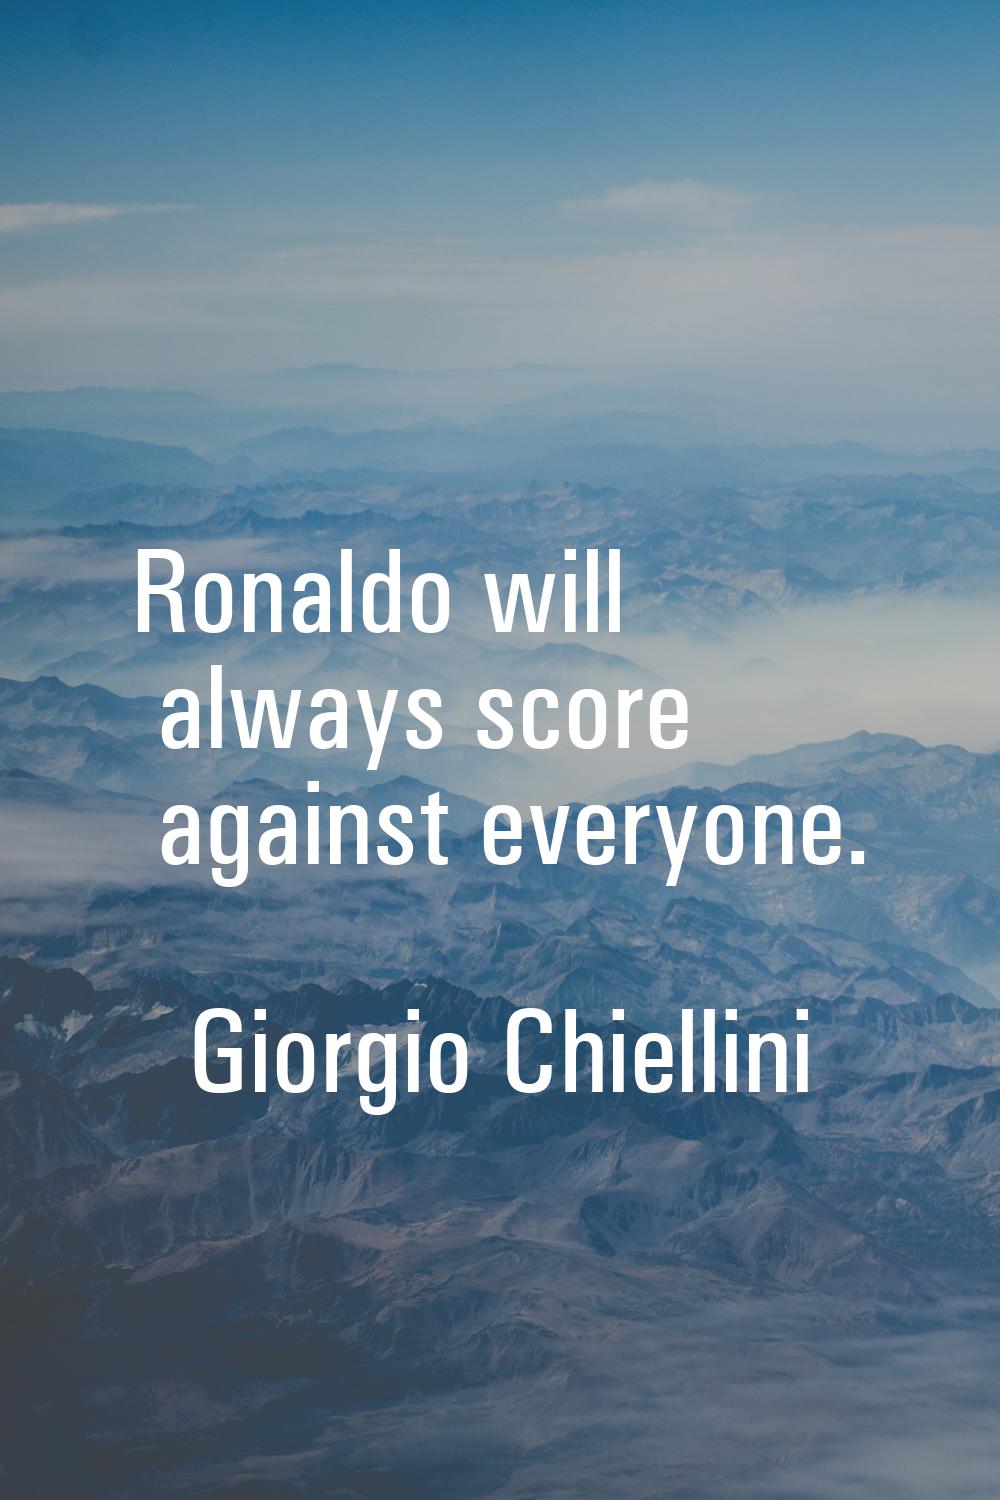 Ronaldo will always score against everyone.